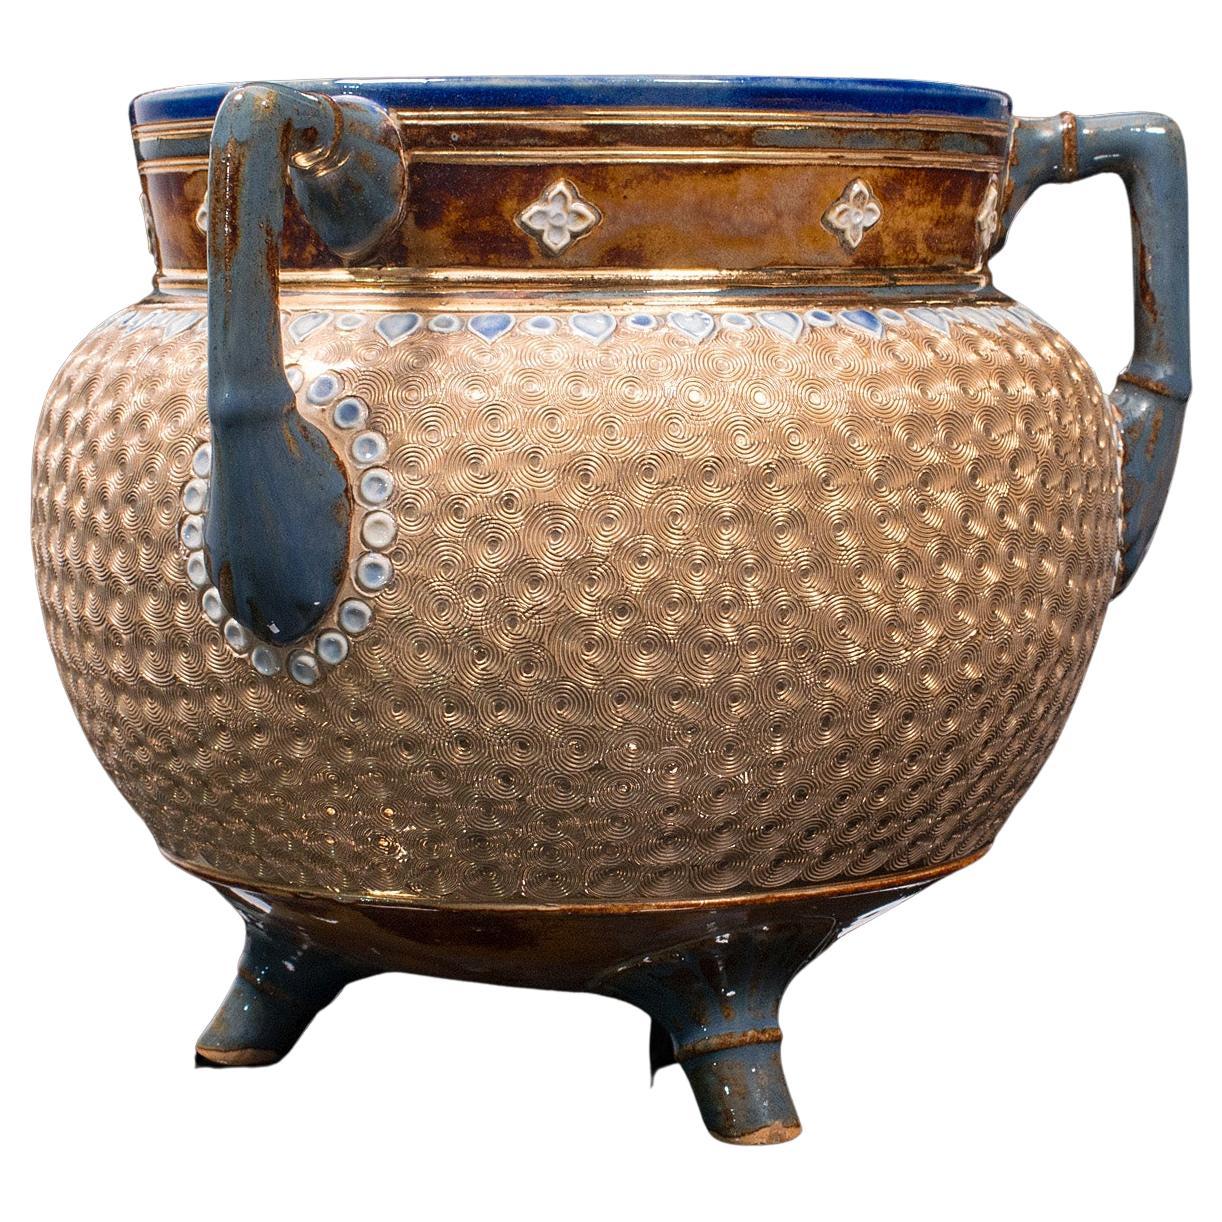 Antique Decorative Jardiniere Pot, English, Ceramic, Planter, Edwardian, C.1910